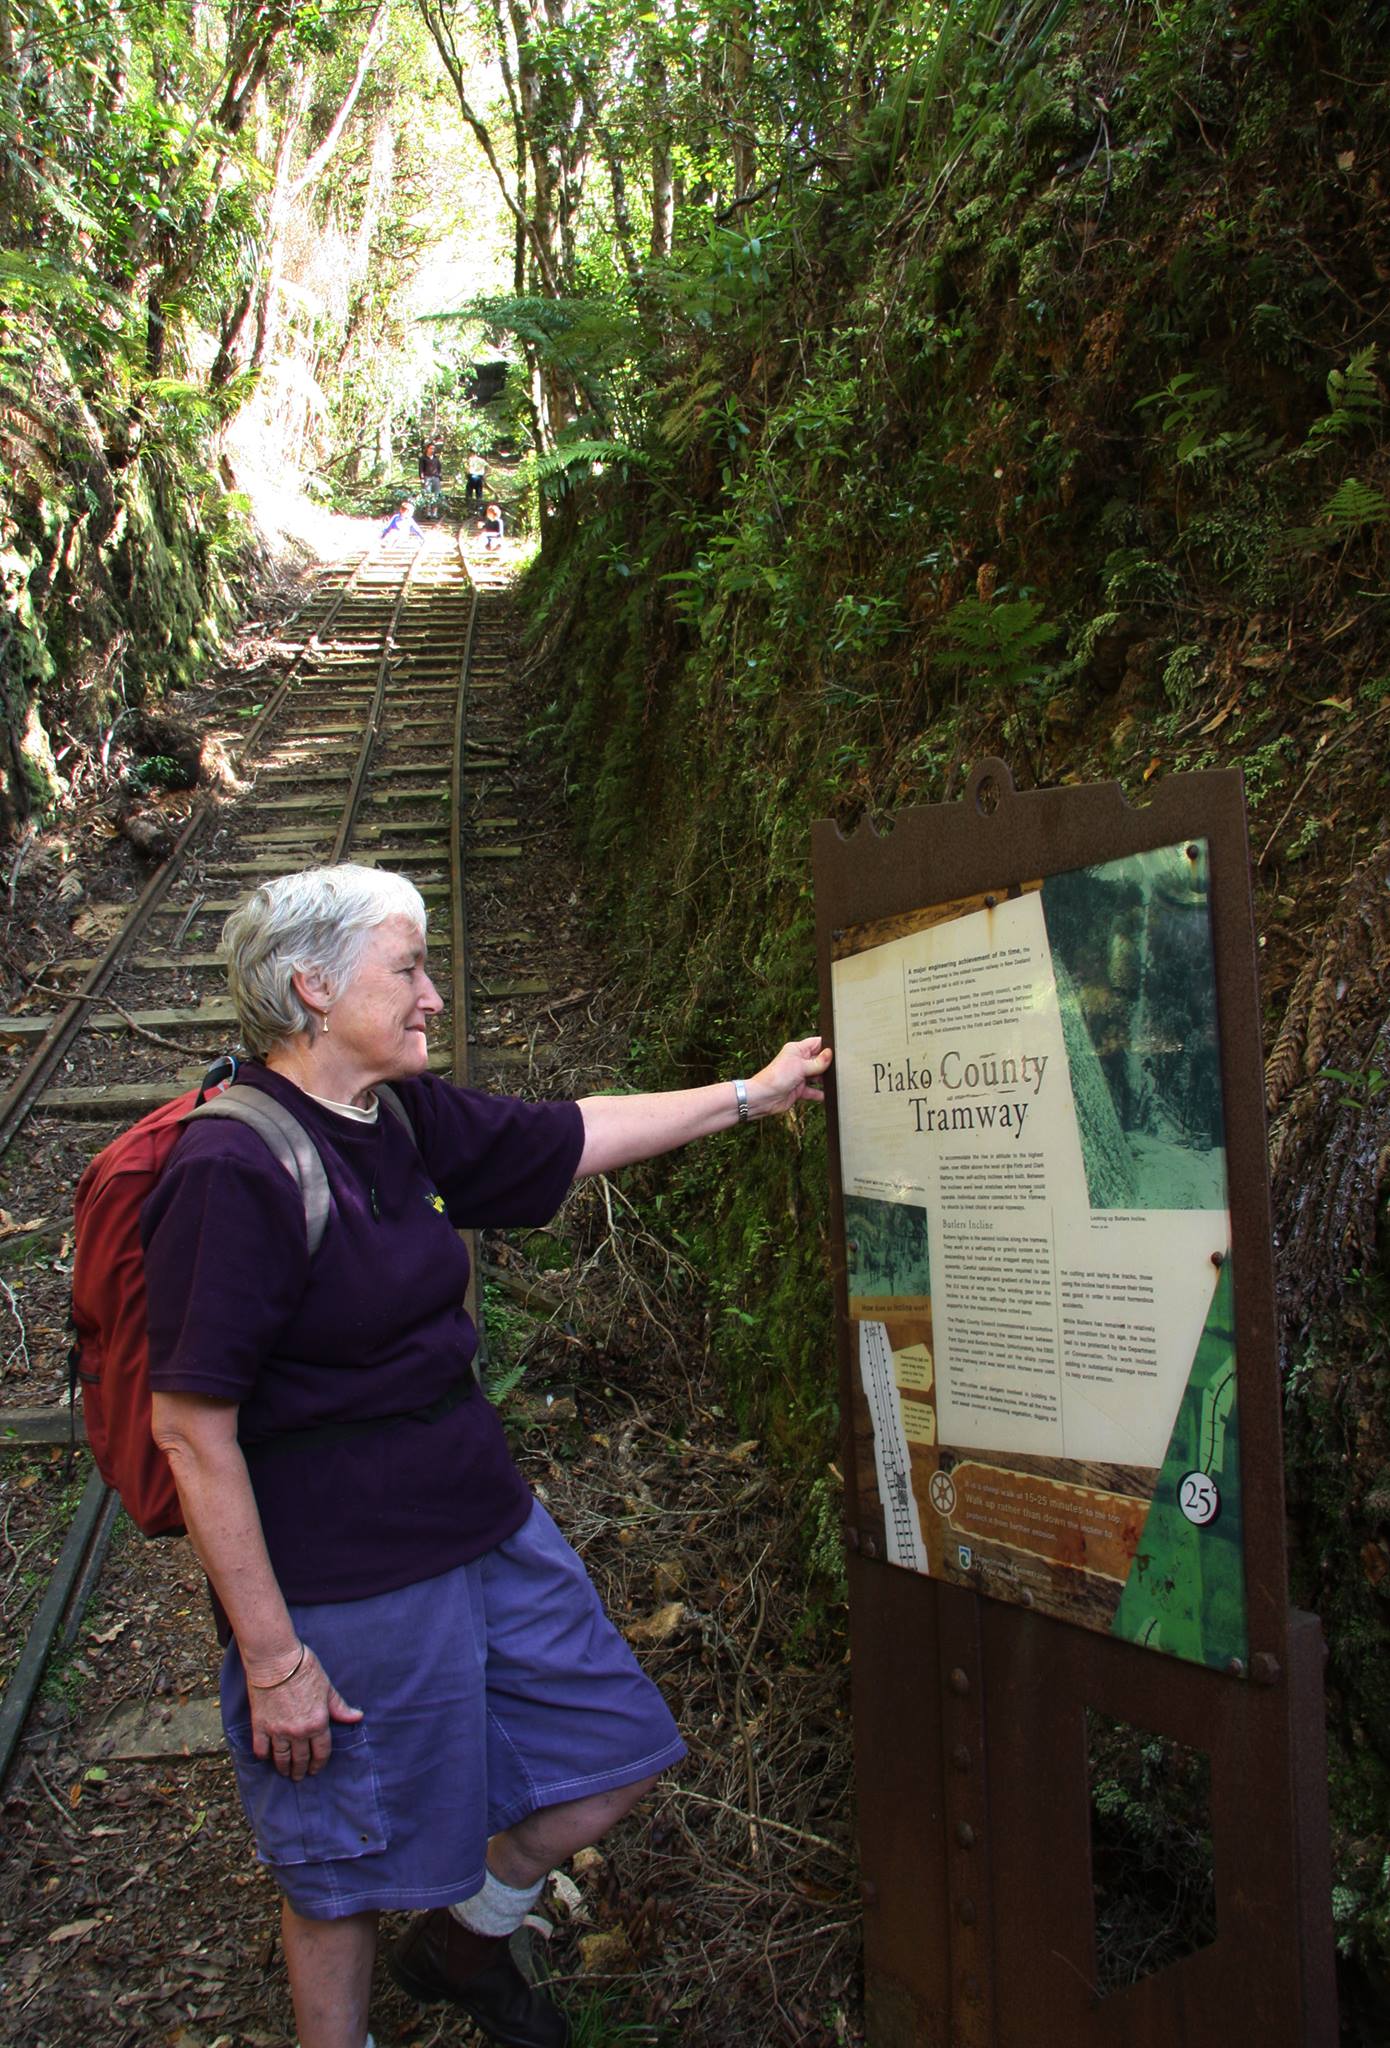 Waiorongomai Valley tramping tracks